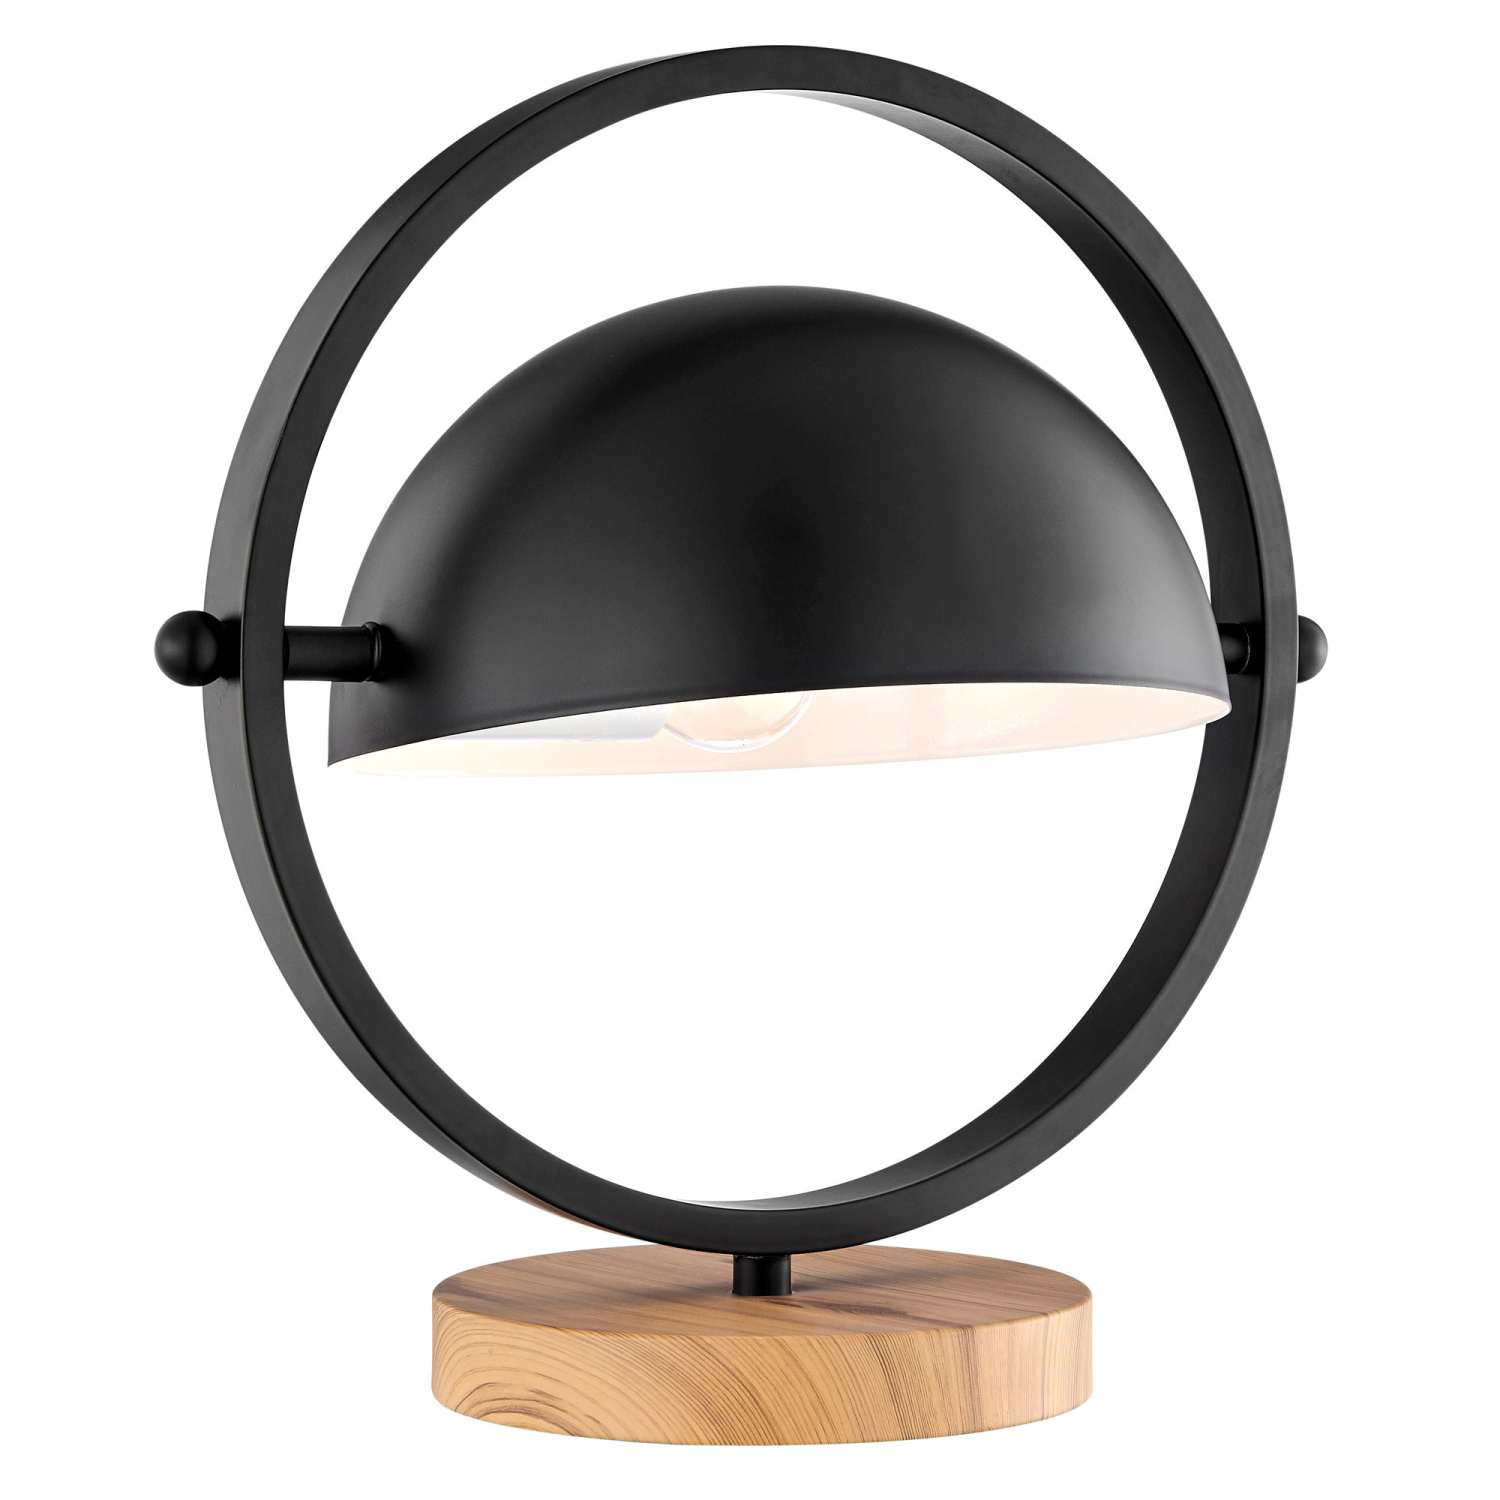 Wanda Desk Lamp Color Option Black with Wooden Base